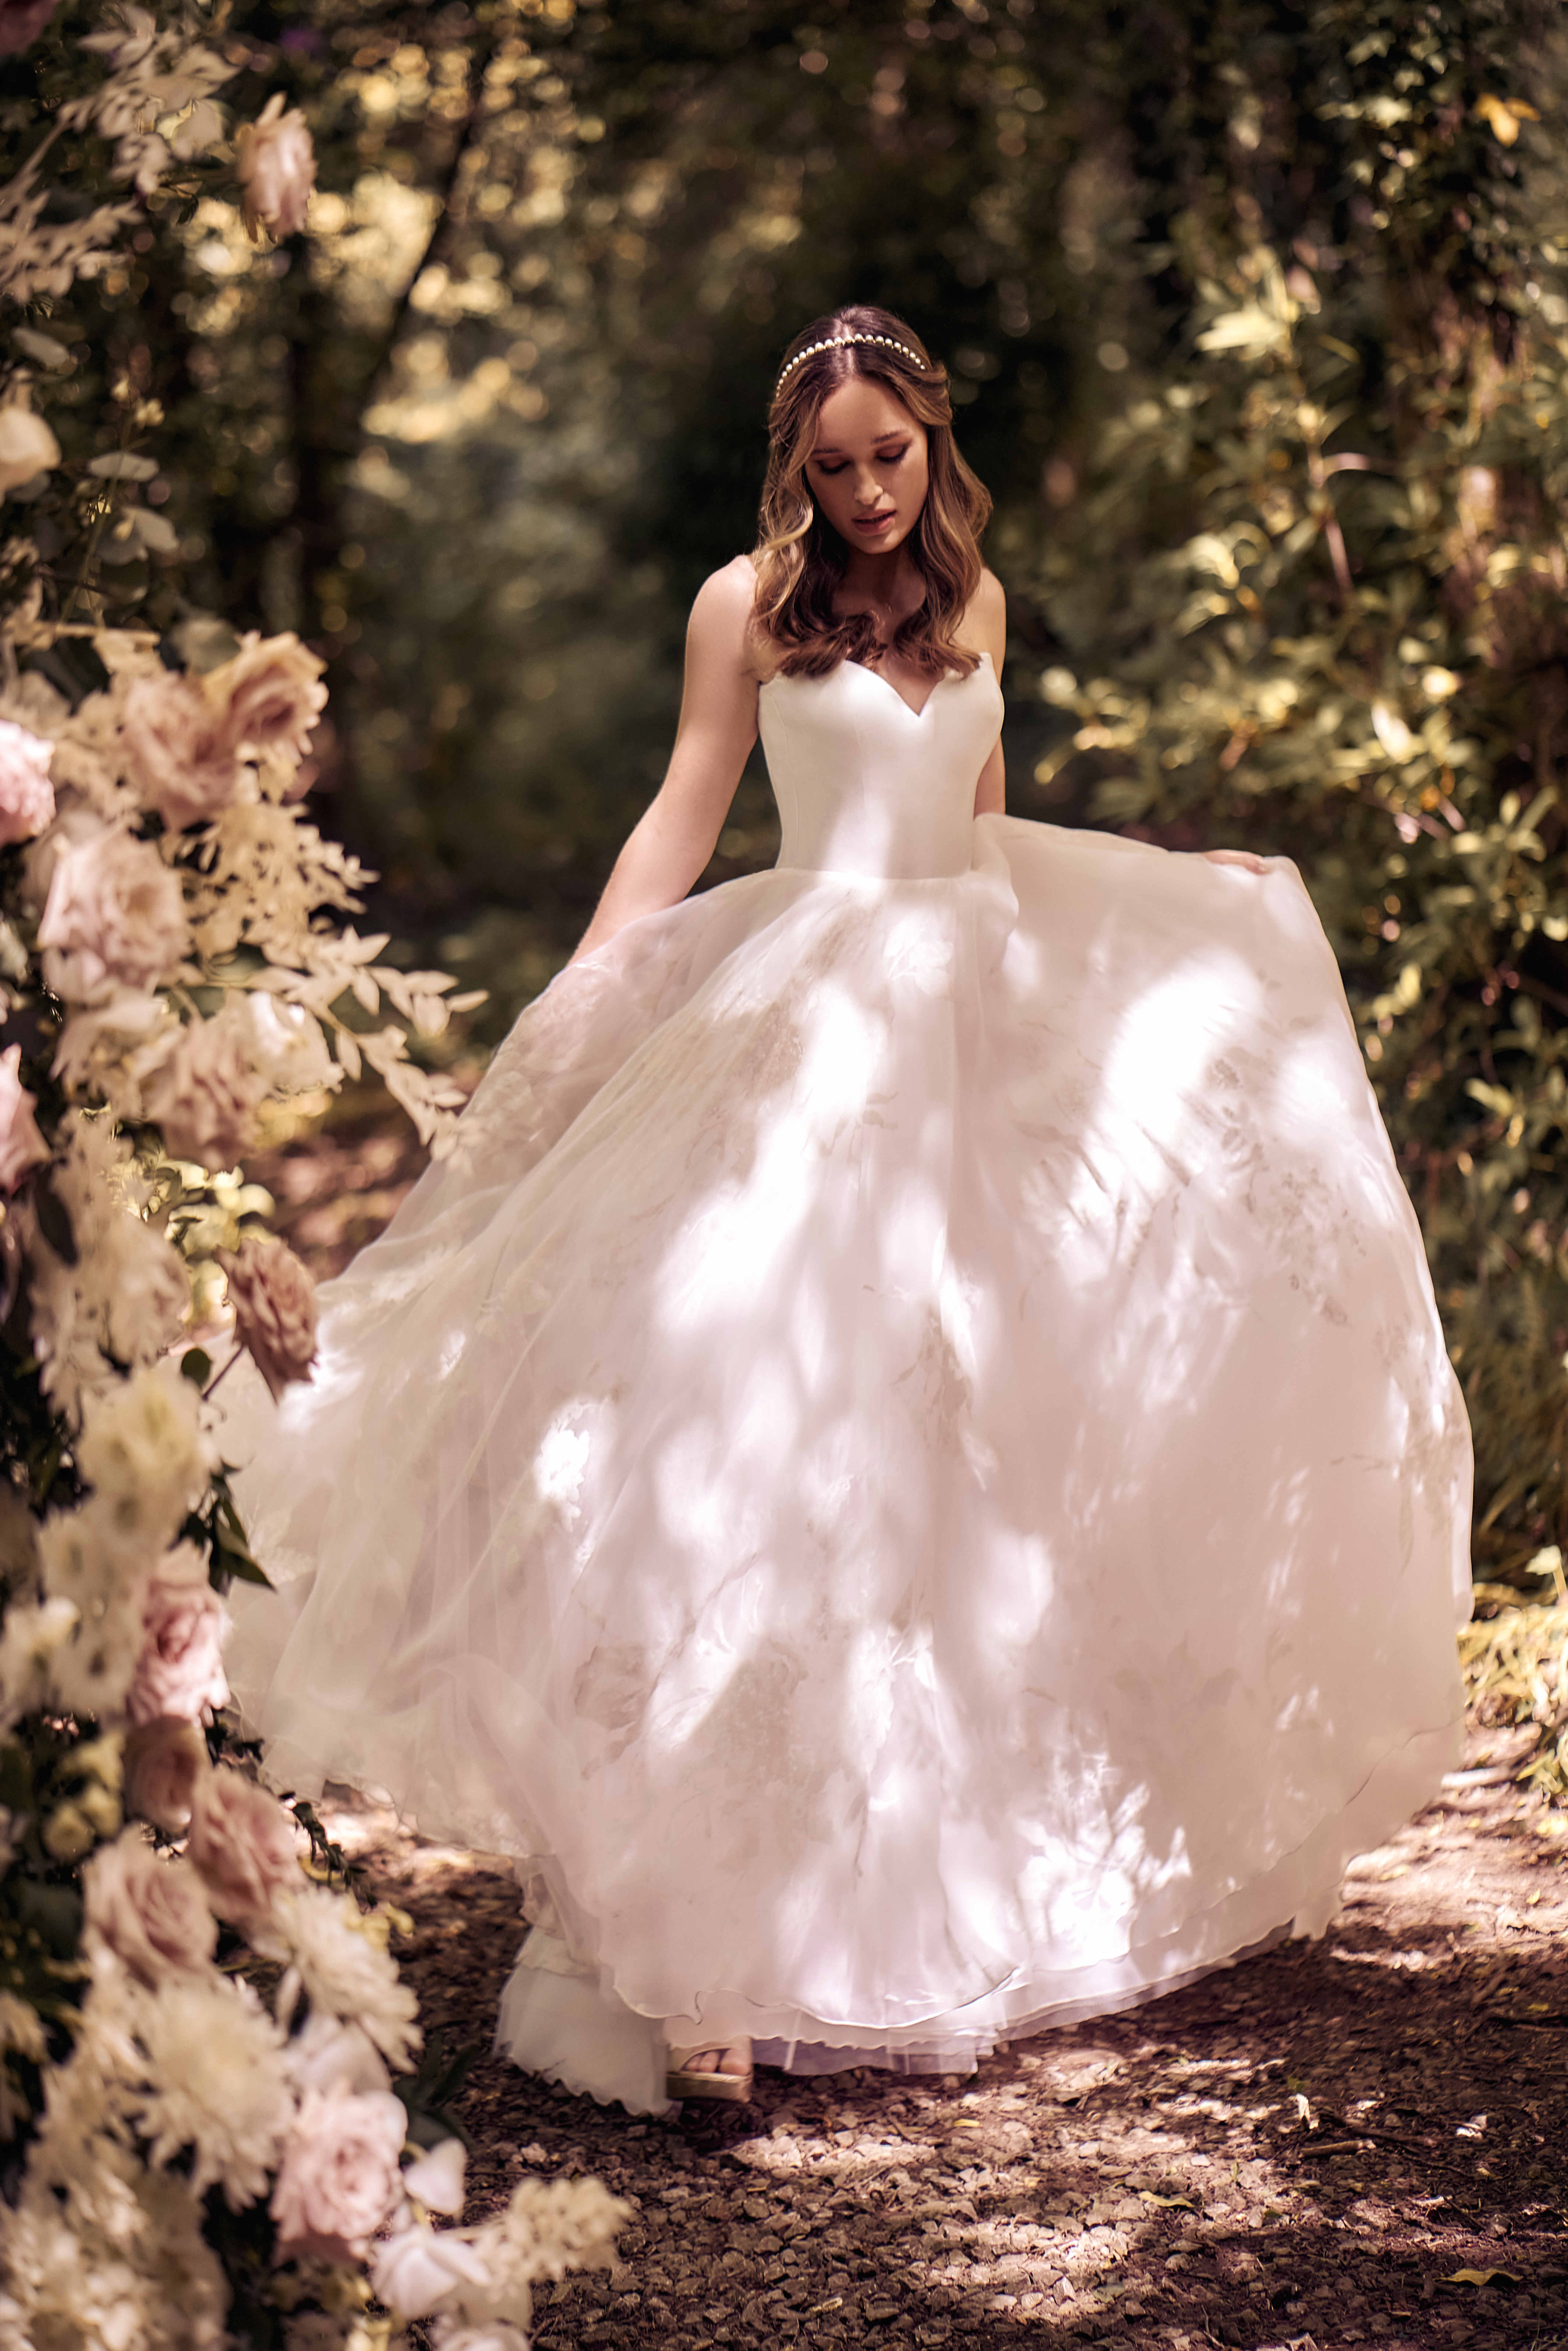 Rose-stephanie-allin-wedding-dress